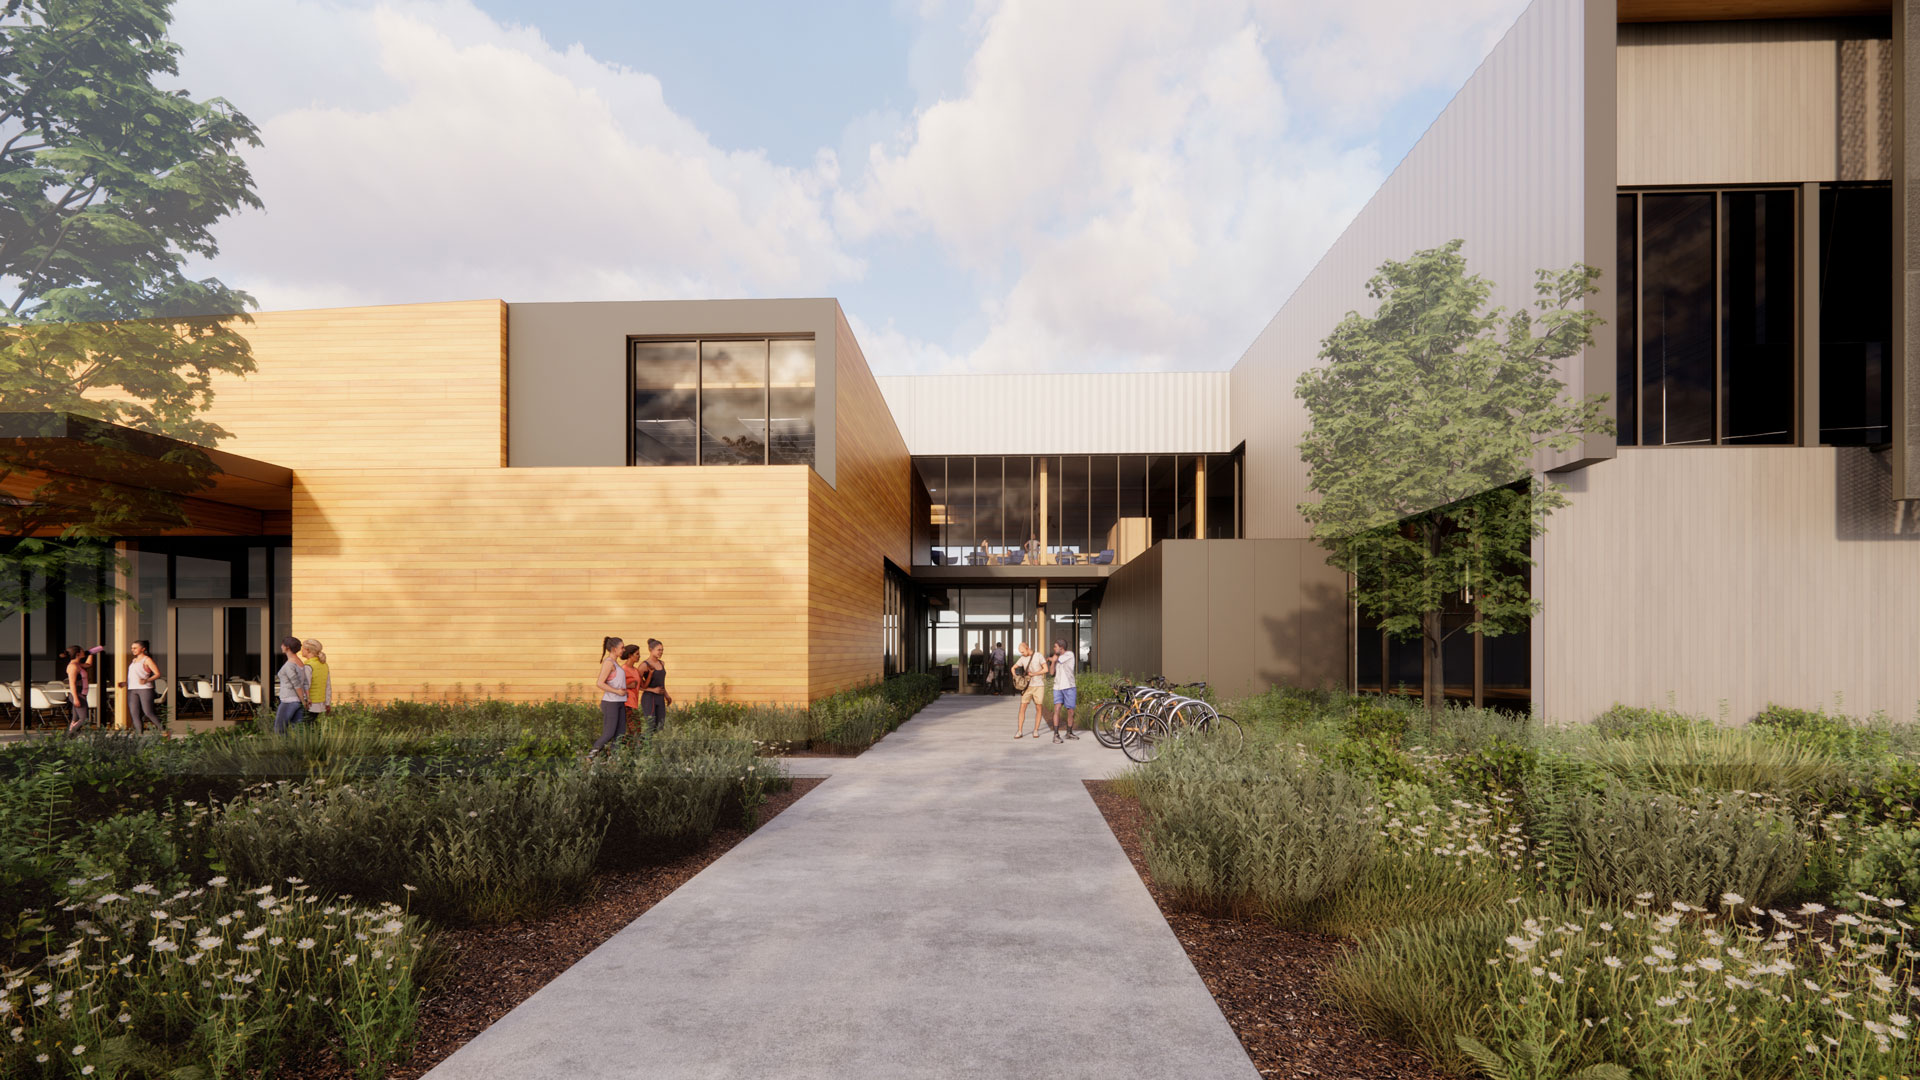 Redmond Senior & Community Center - Opsis Architecture